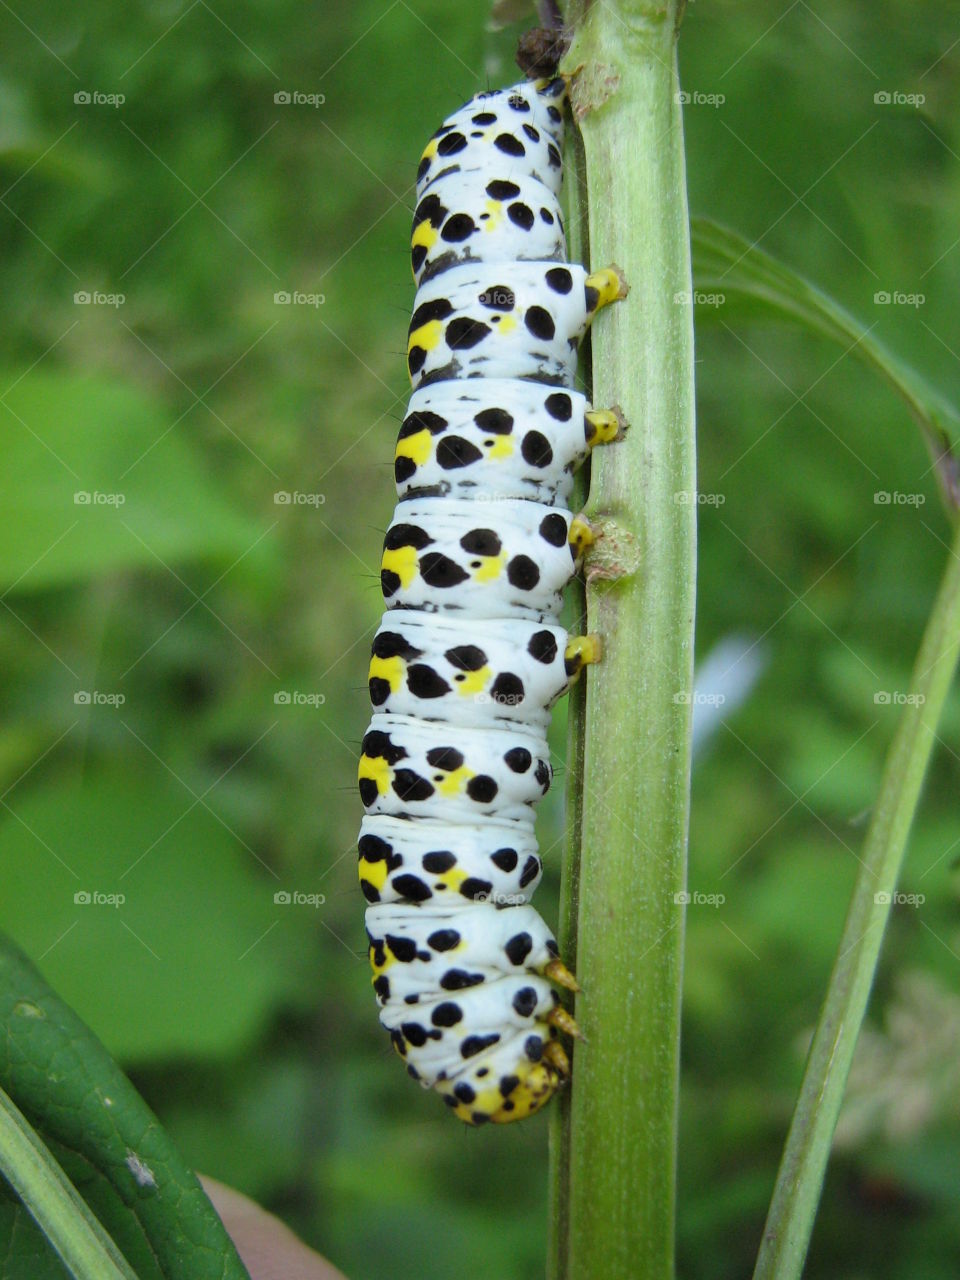 Close-up of caterpillar on plant stem